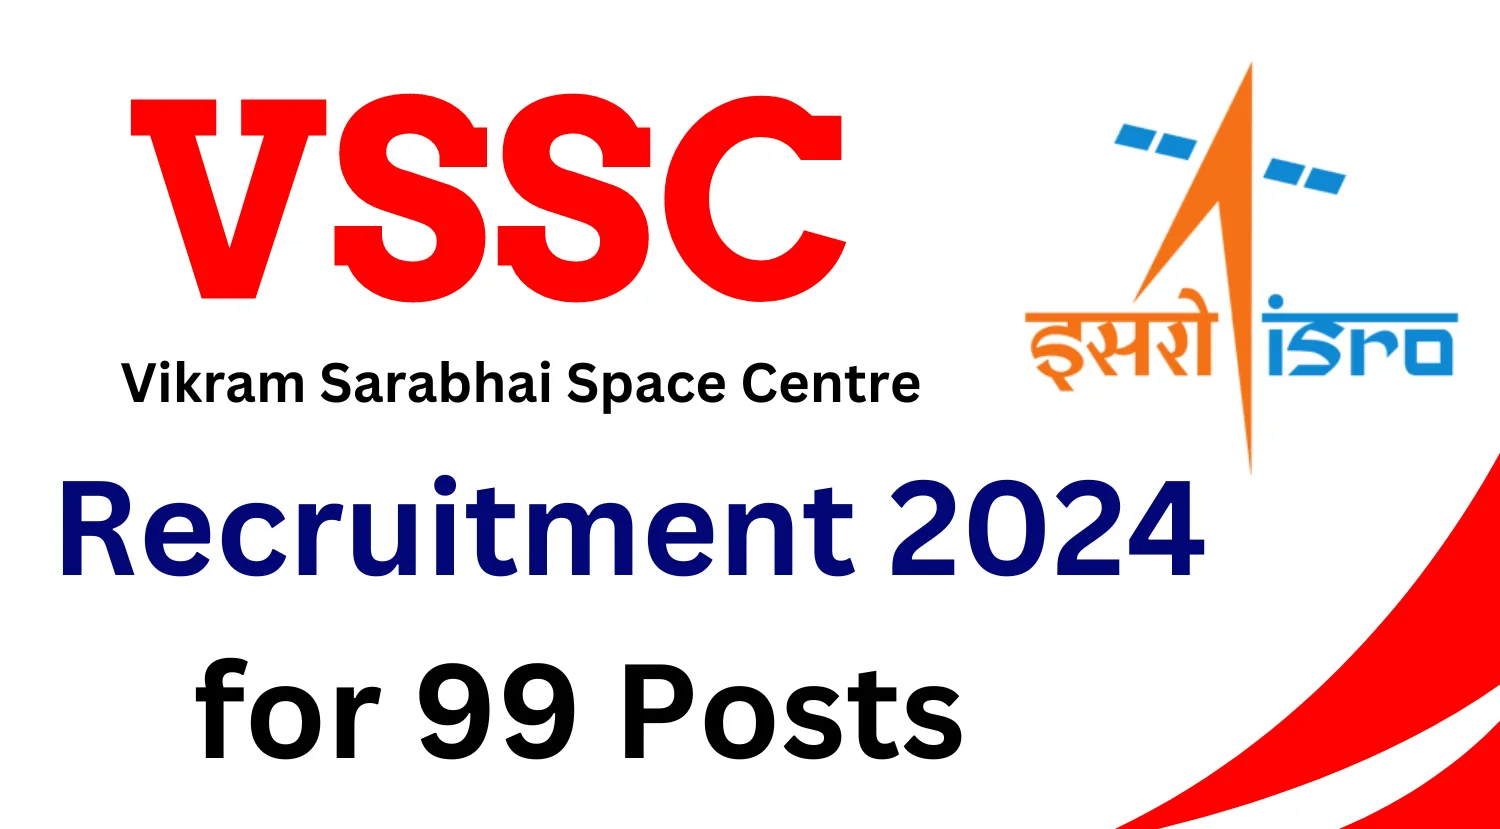 VSSC Recruitment 2024 for 99 Posts